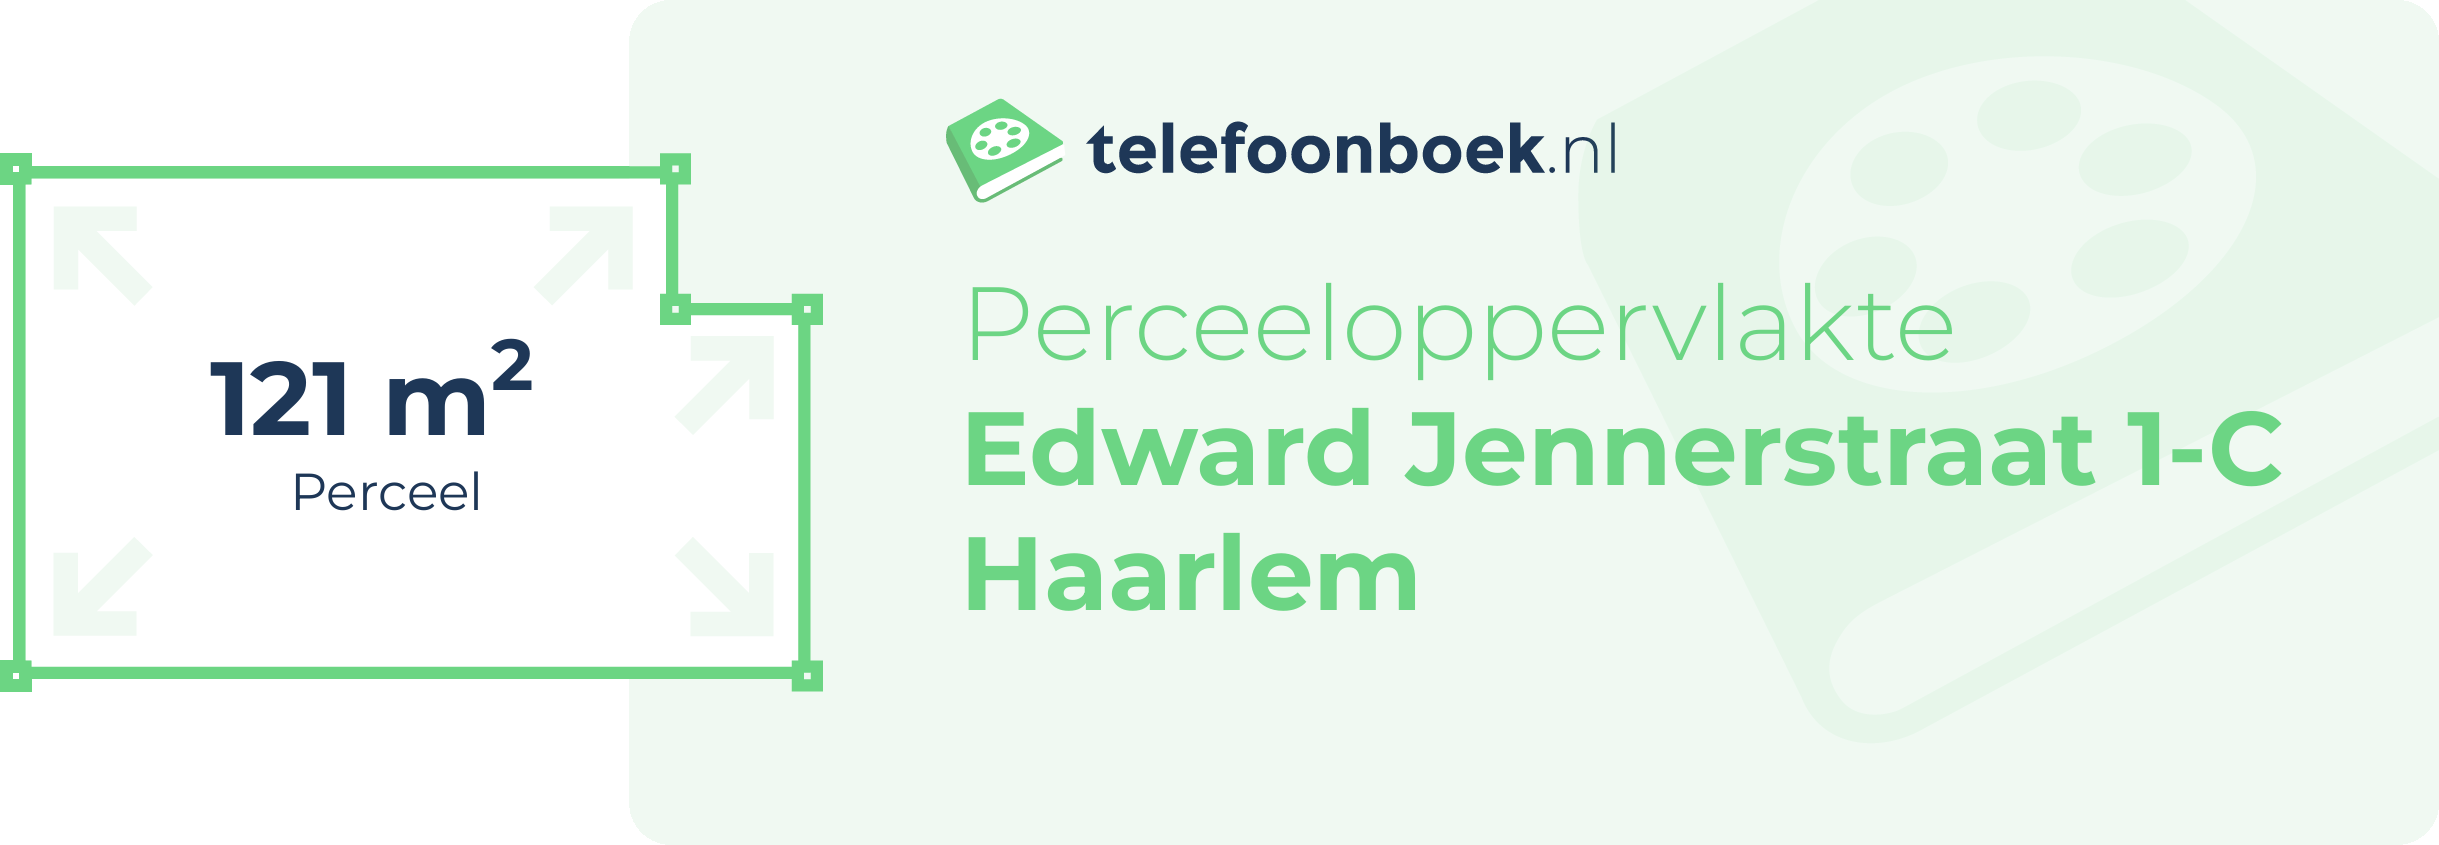 Perceeloppervlakte Edward Jennerstraat 1-C Haarlem